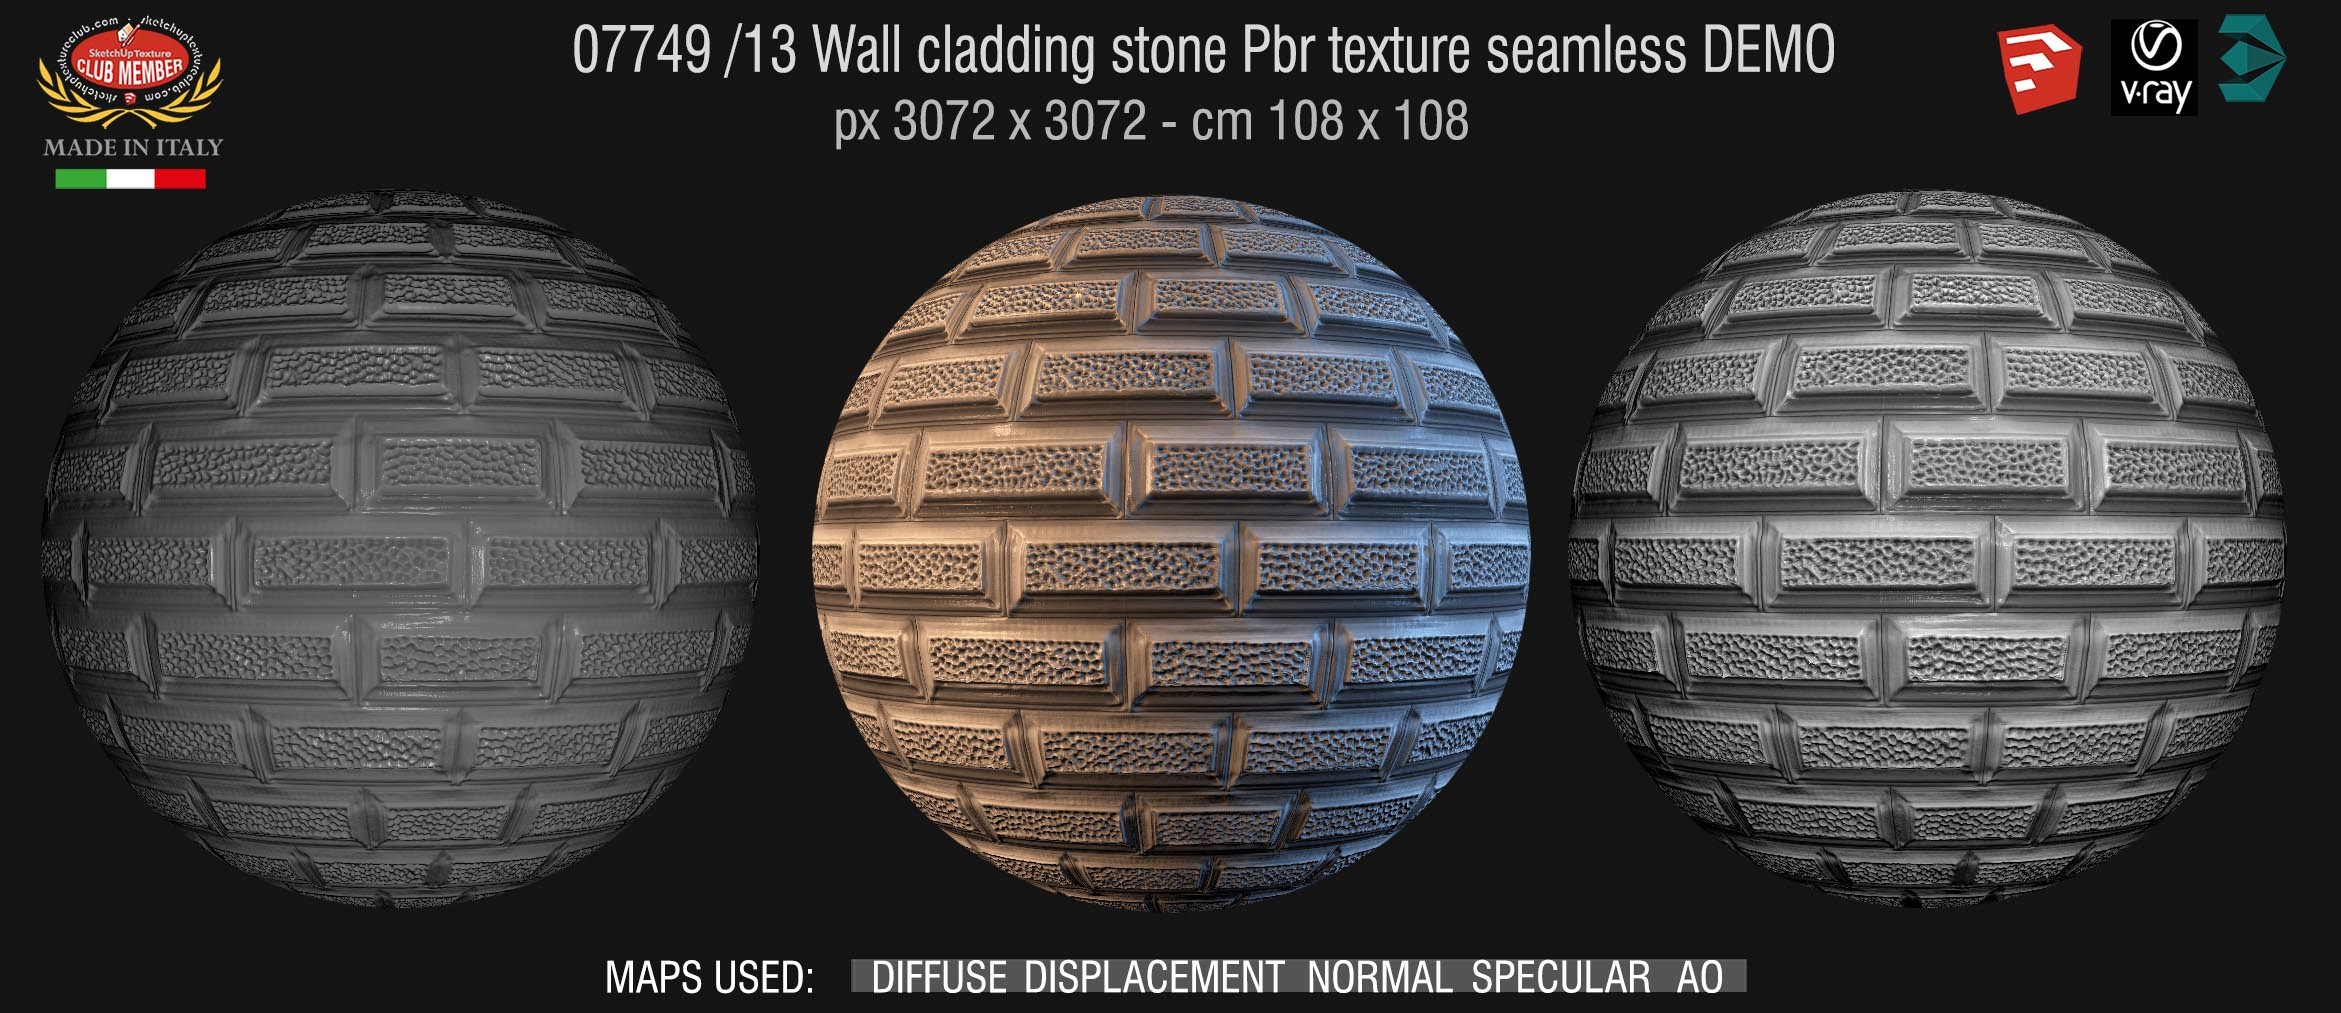 07749/13 Wall cladding stone pbr texture seamless demo